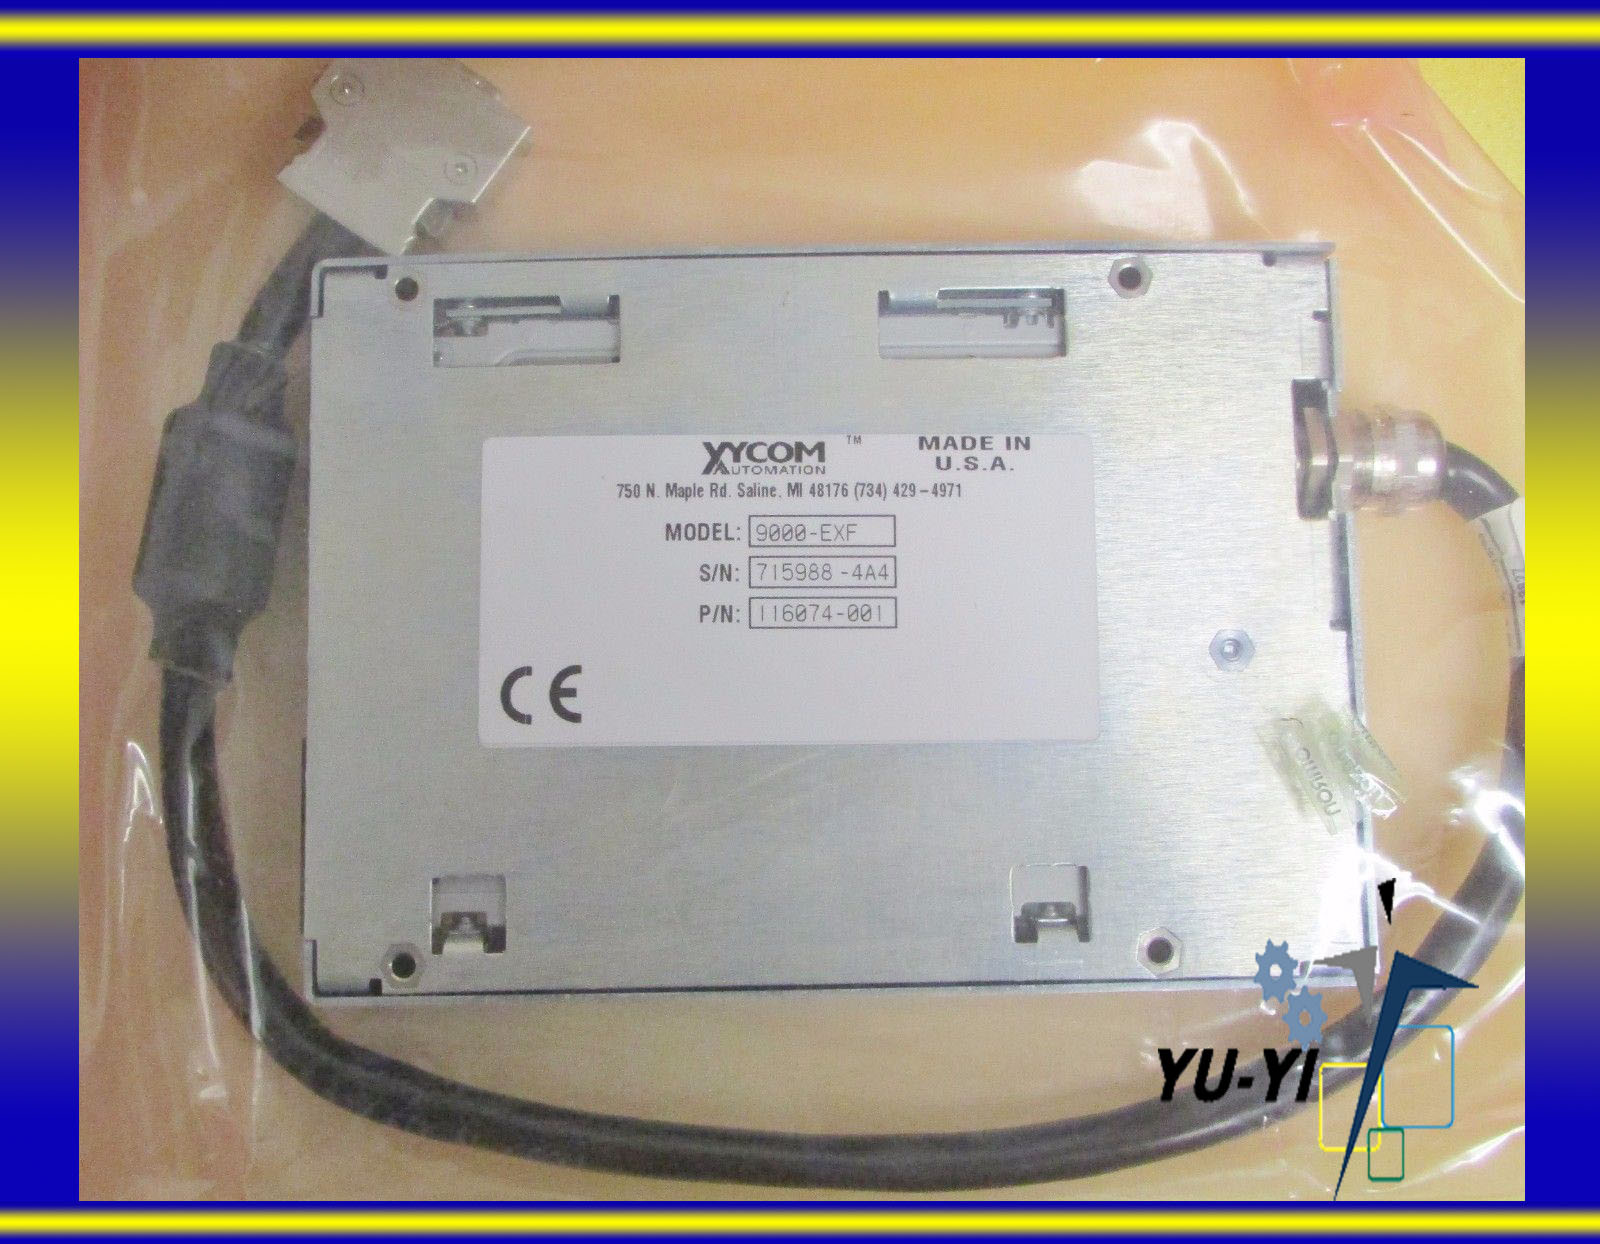 XYCOM AUTOMATION 900 EXF Industrial Floppy Disc Drive 116074 001